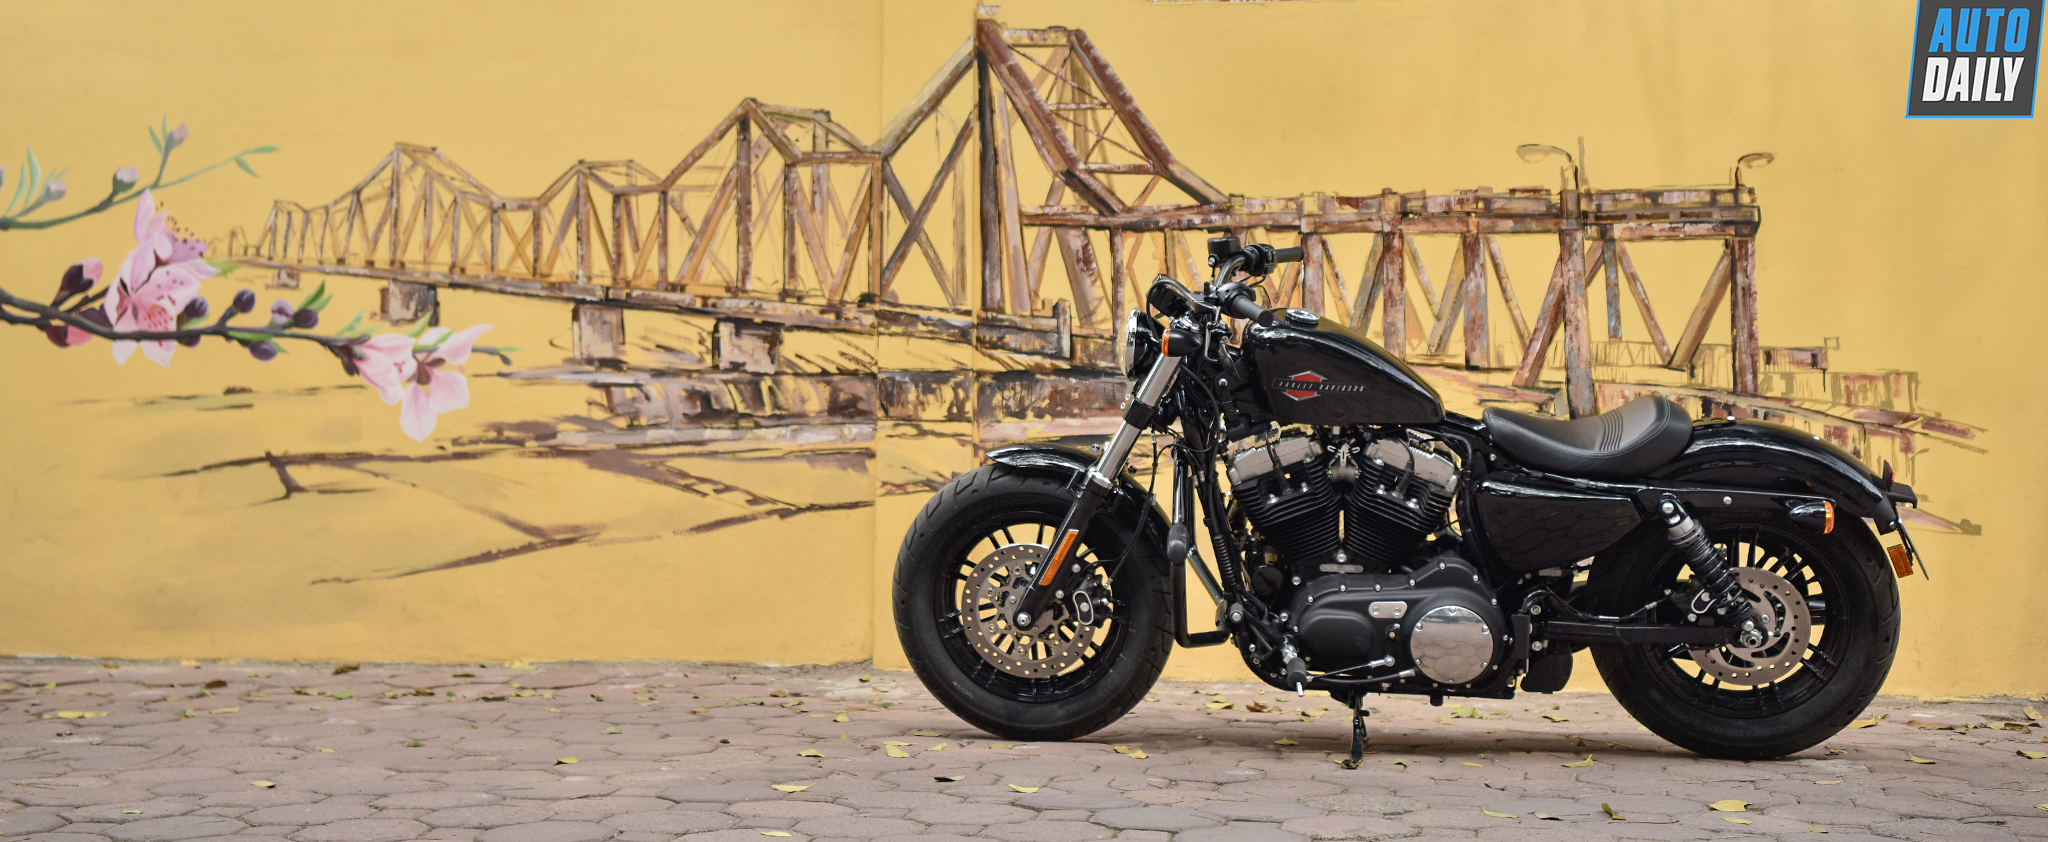 Harley-Davidson 48 2019 Review: Reasonably priced American motorcycles for Vietnamese bikers 45.jpg